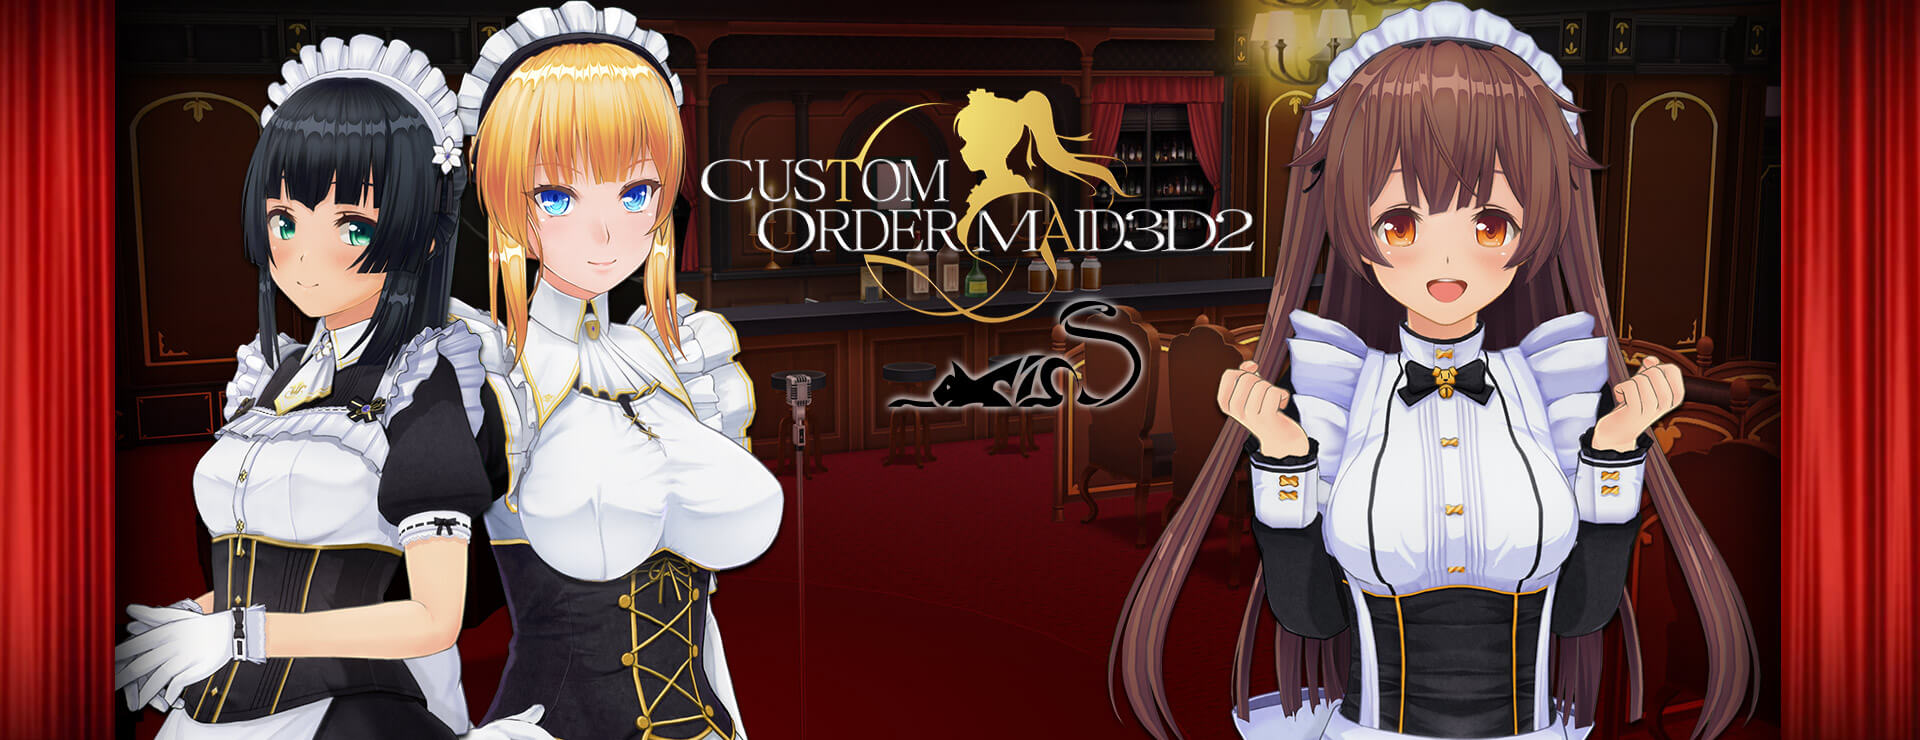 Custom Order Maid 3D2 - Action Adventure Game